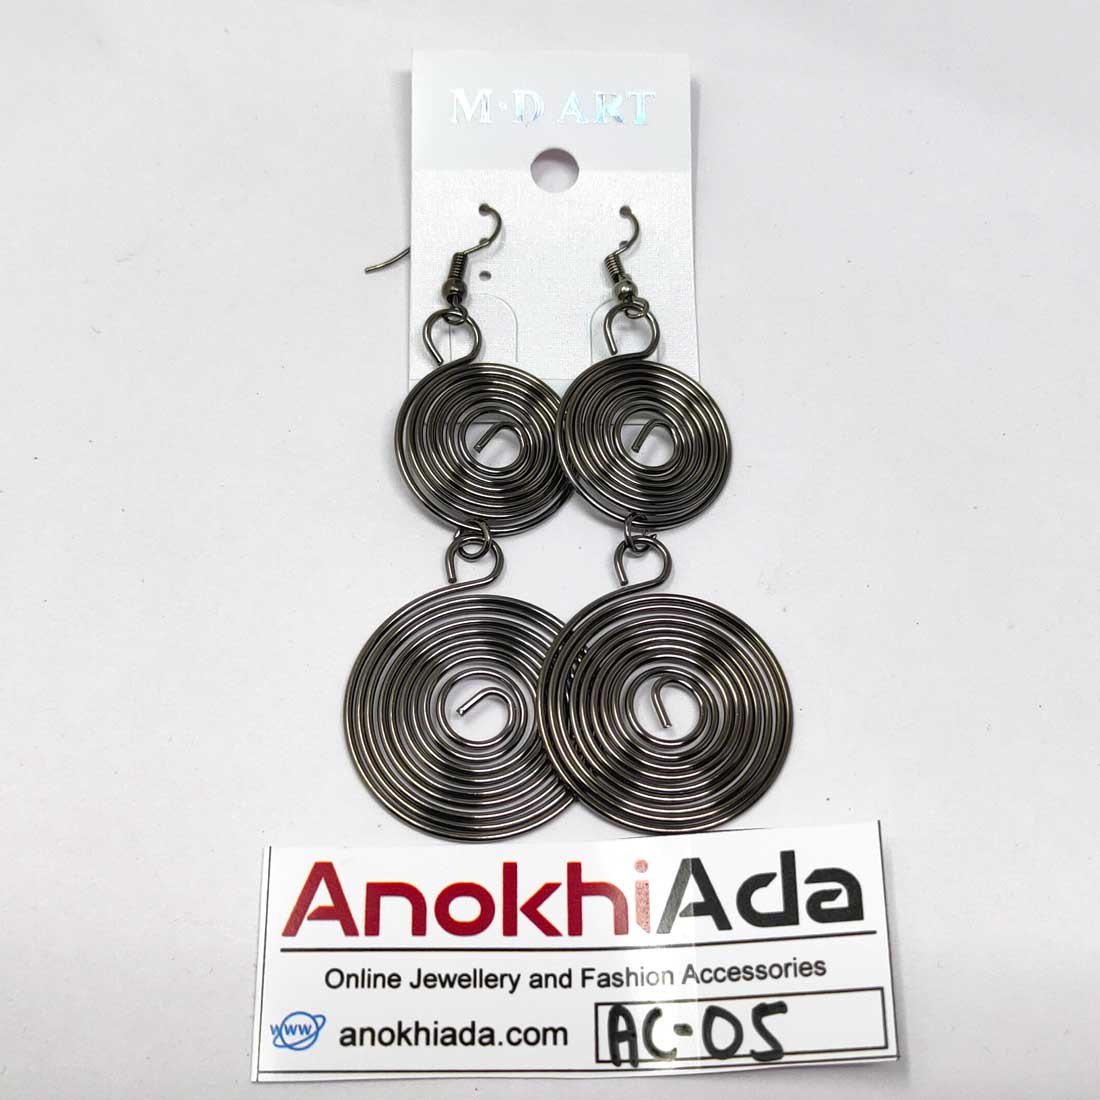 Anokhi Ada Metal Drop and Dangle Earrings for Girls and Women (Silver)-AC-05